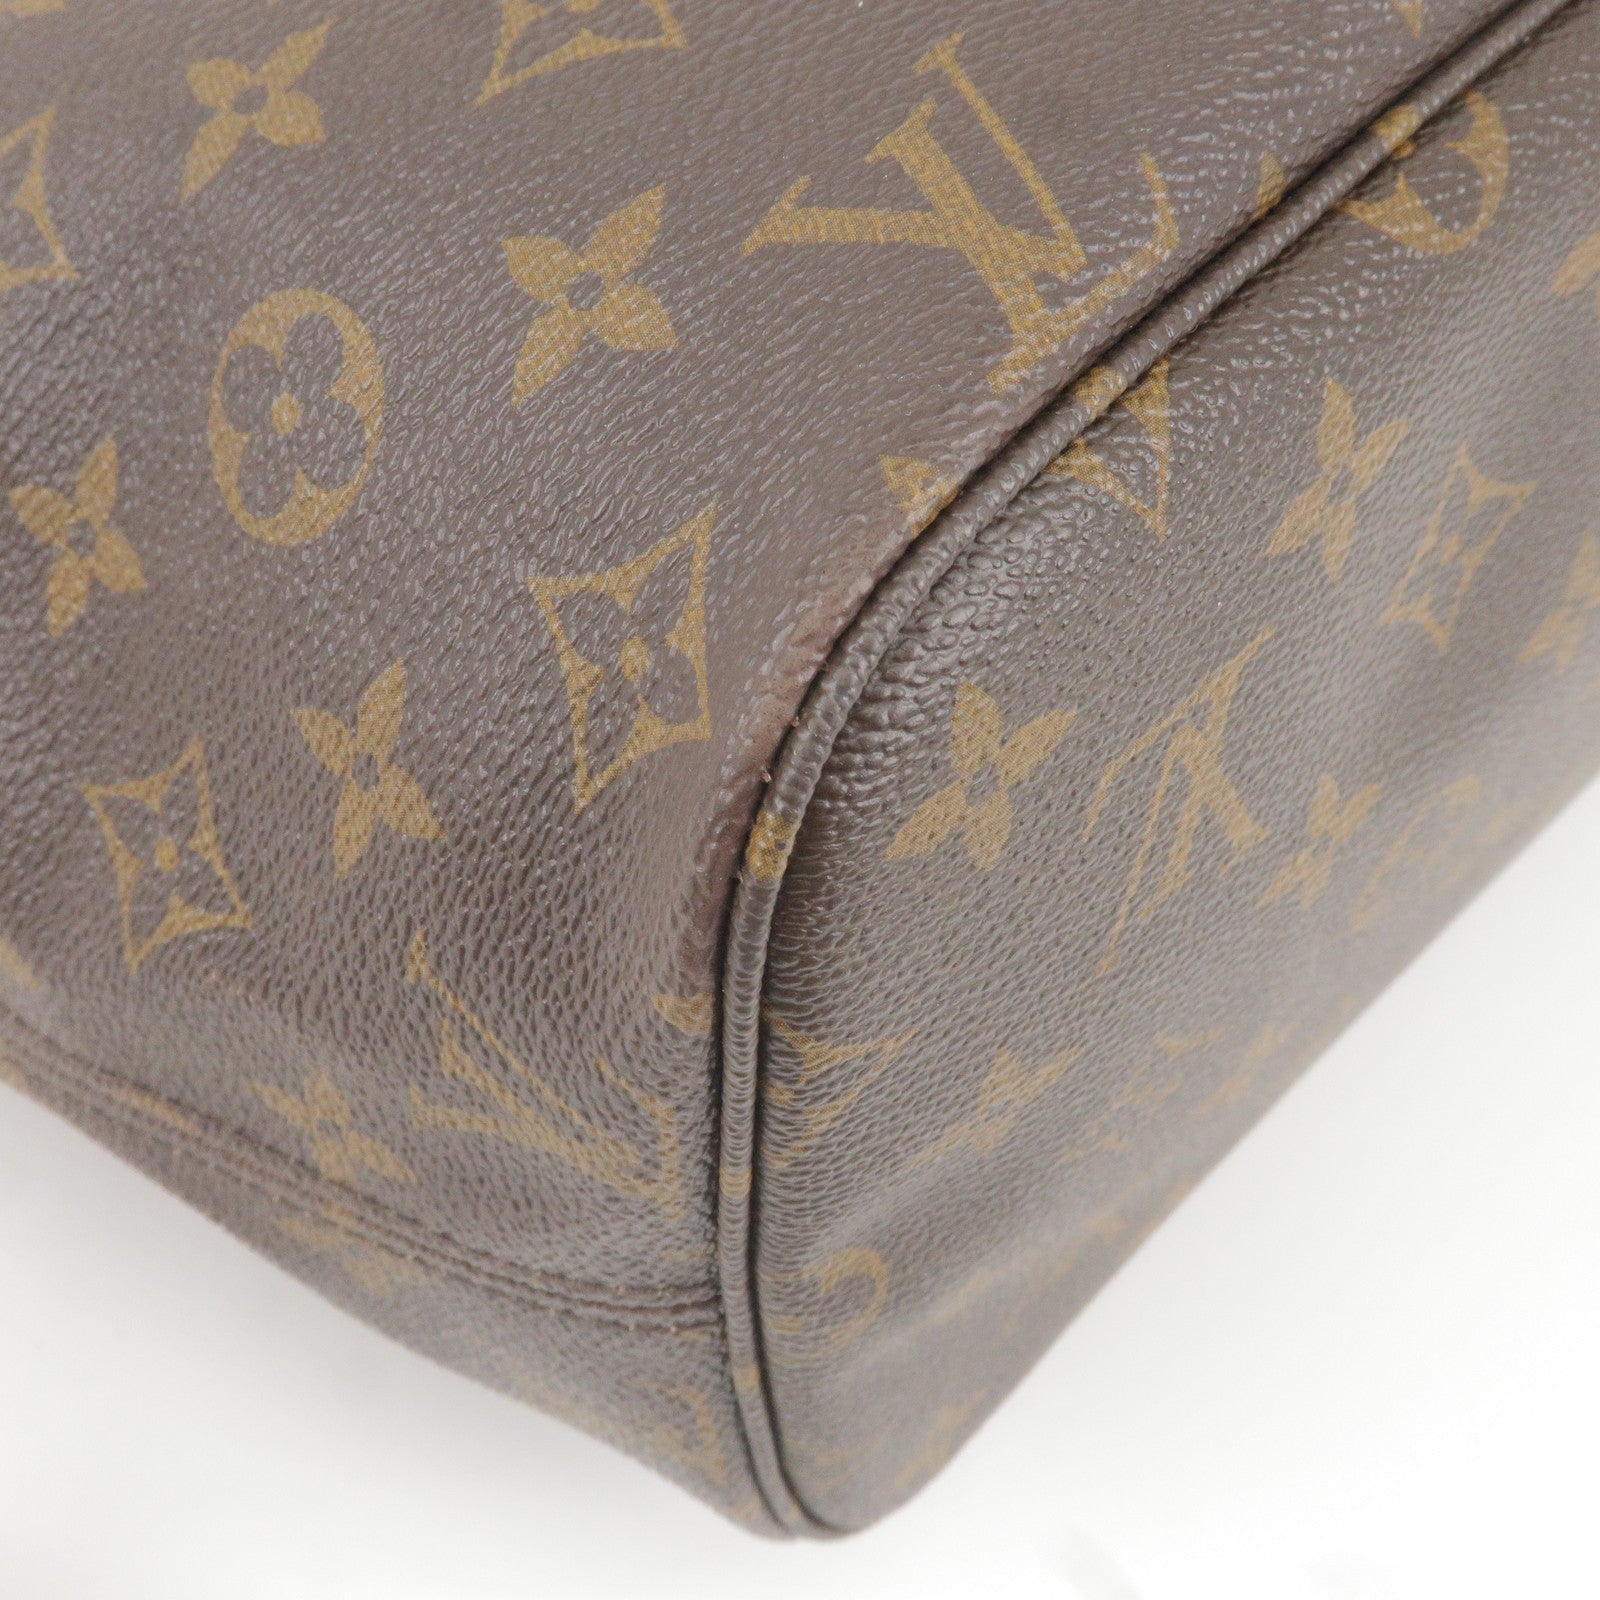 Louis Vuitton 2012 pre-owned Damier Ebene Speedy 35 two-way bag, Brown